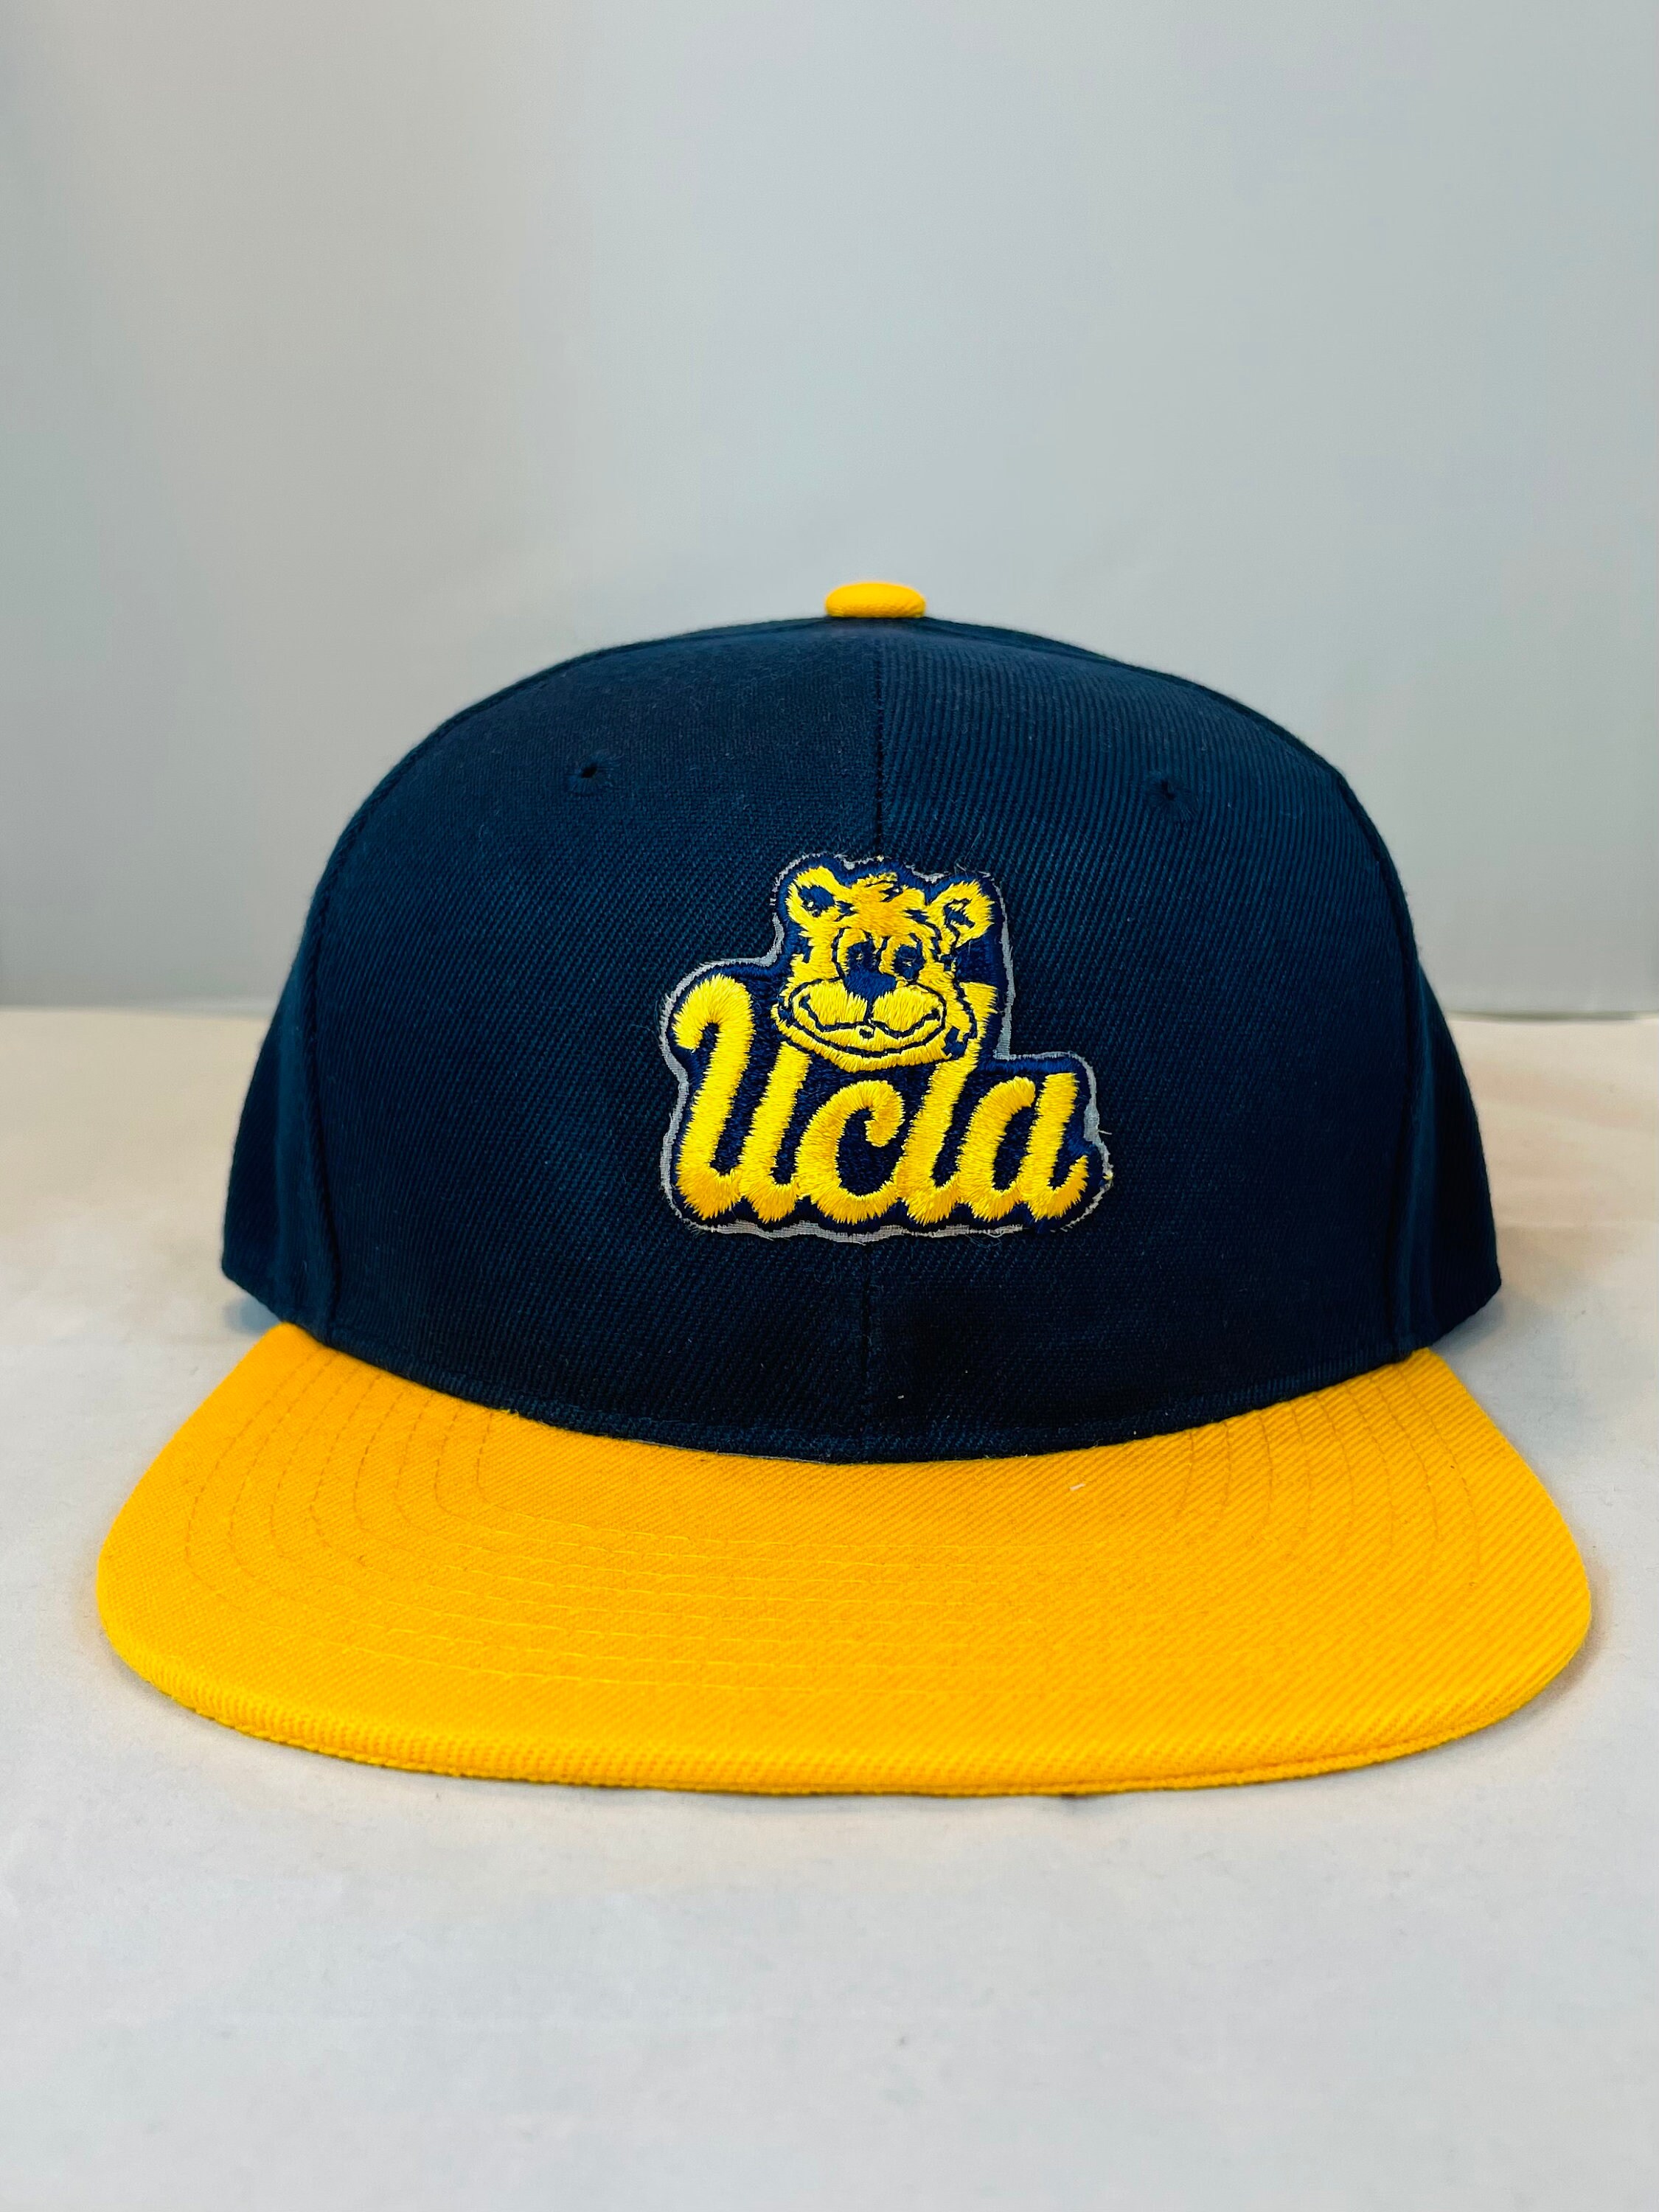 UCLA Bruins VINTAGE NCAA New Era 9Fifty 9Fifty Snapback Hat